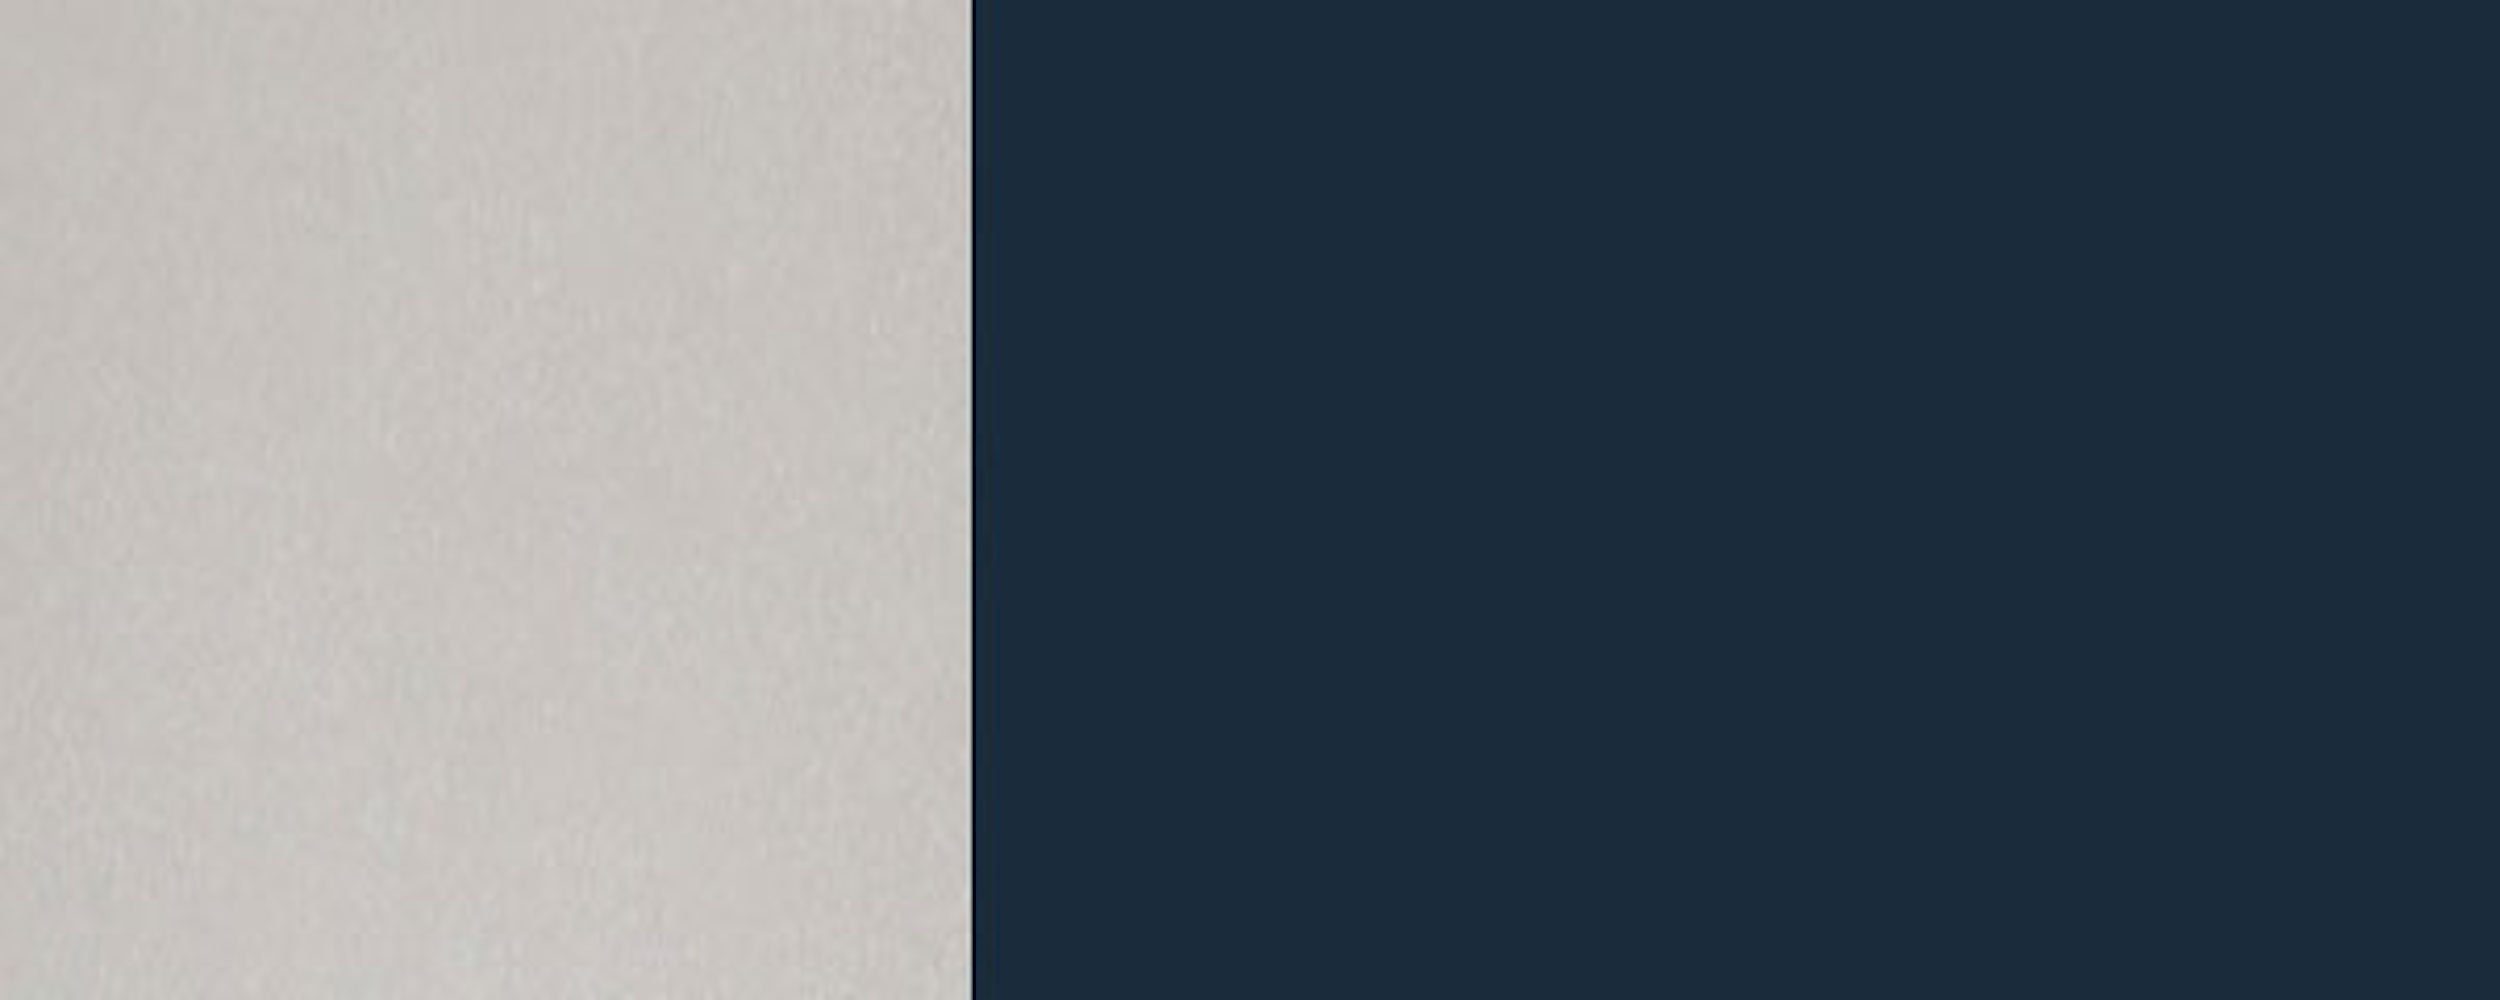 5011 80cm Front- und matt Tivoli Korpusfarbe 2-türig Glaseinsatz mit stahlblau RAL Feldmann-Wohnen Klapphängeschrank (Tivoli) (glasklar) wählbar